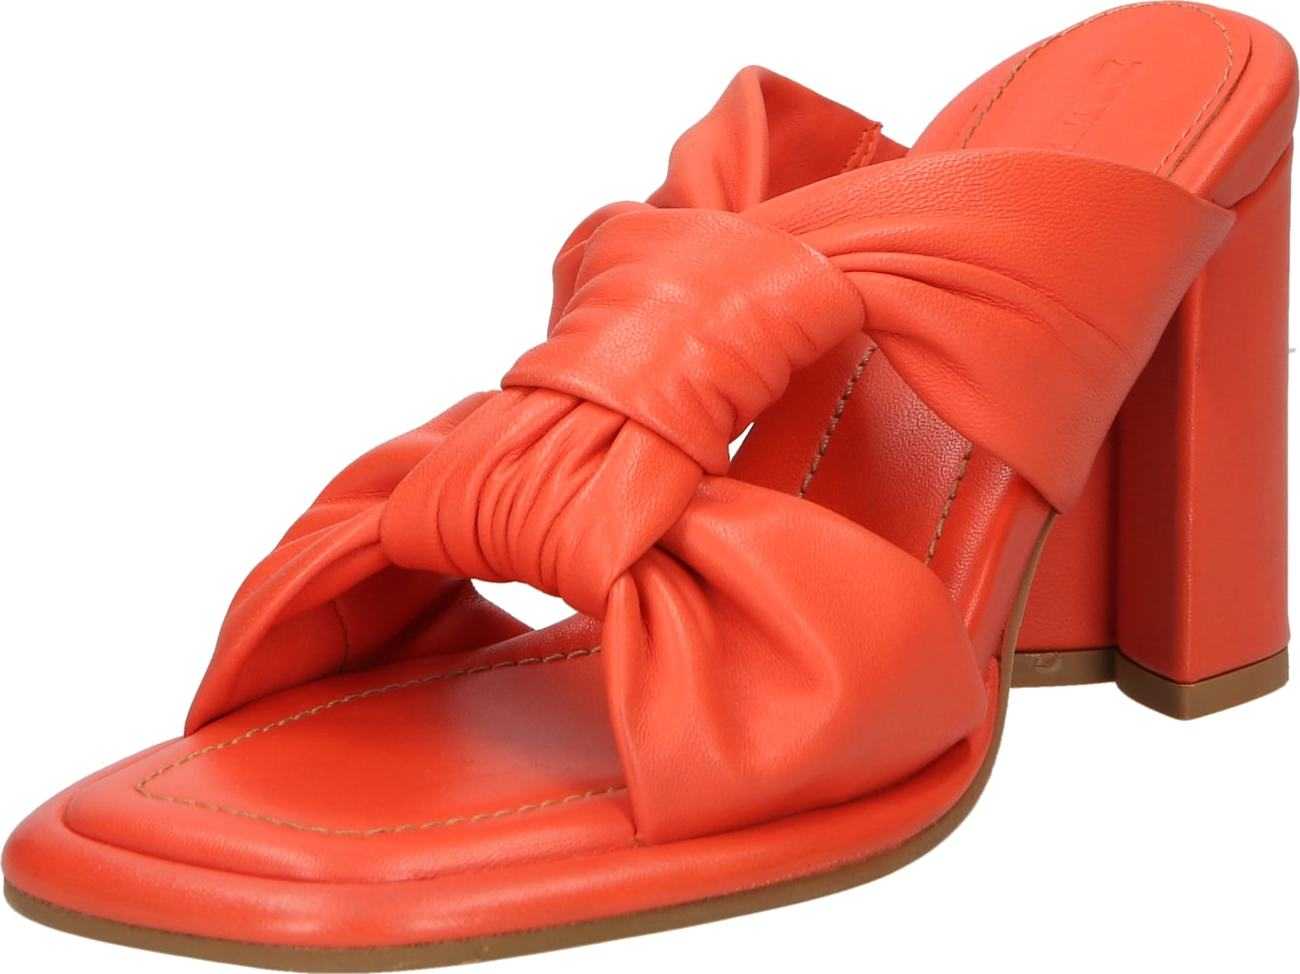 BRONX Pantofle 'Leia-lee' oranžově červená